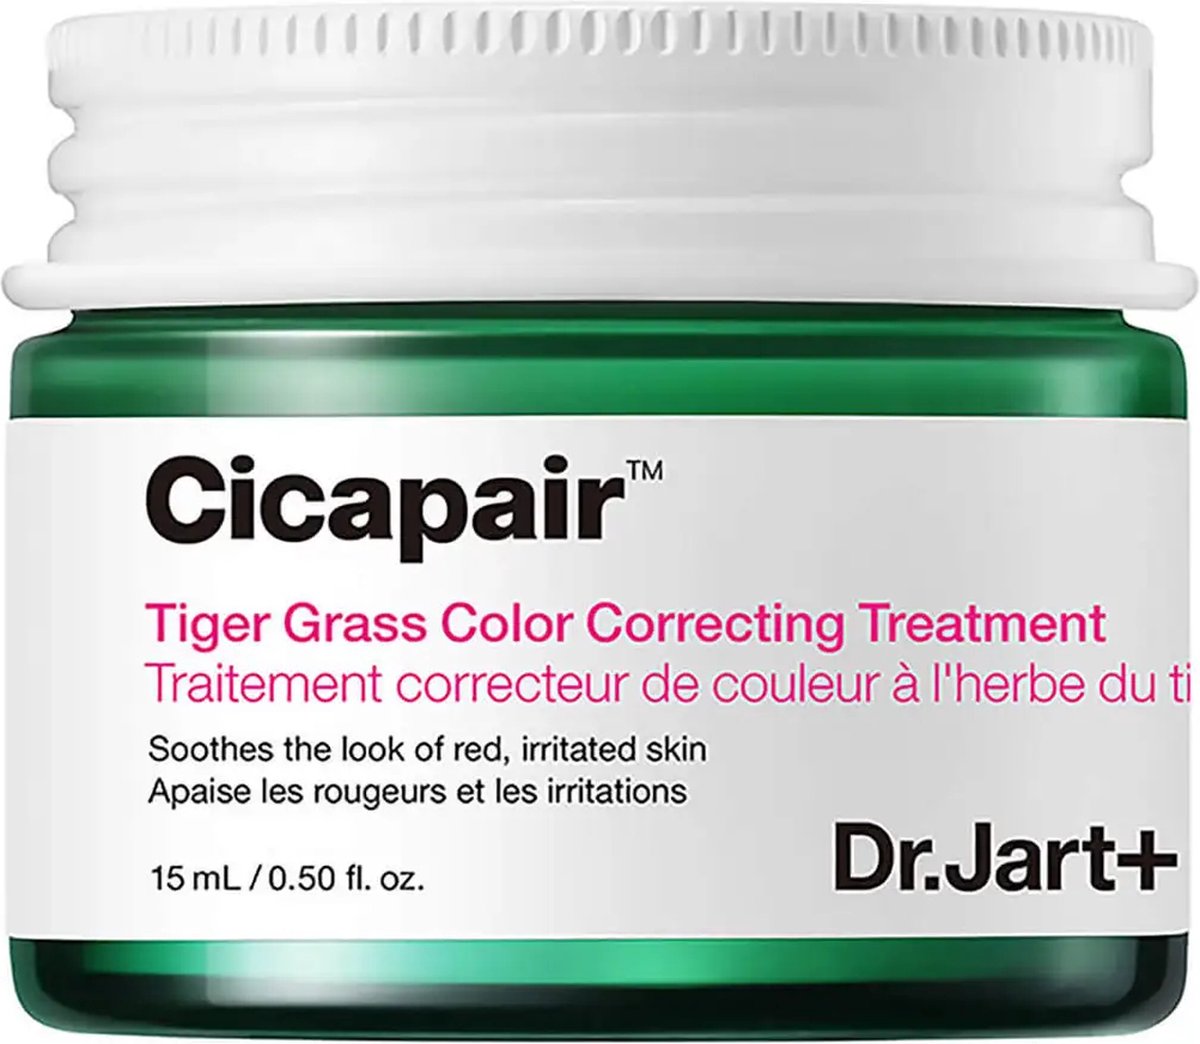 Dr.Jart+ Cicapair Tiger grass color correcting treatment 15ml